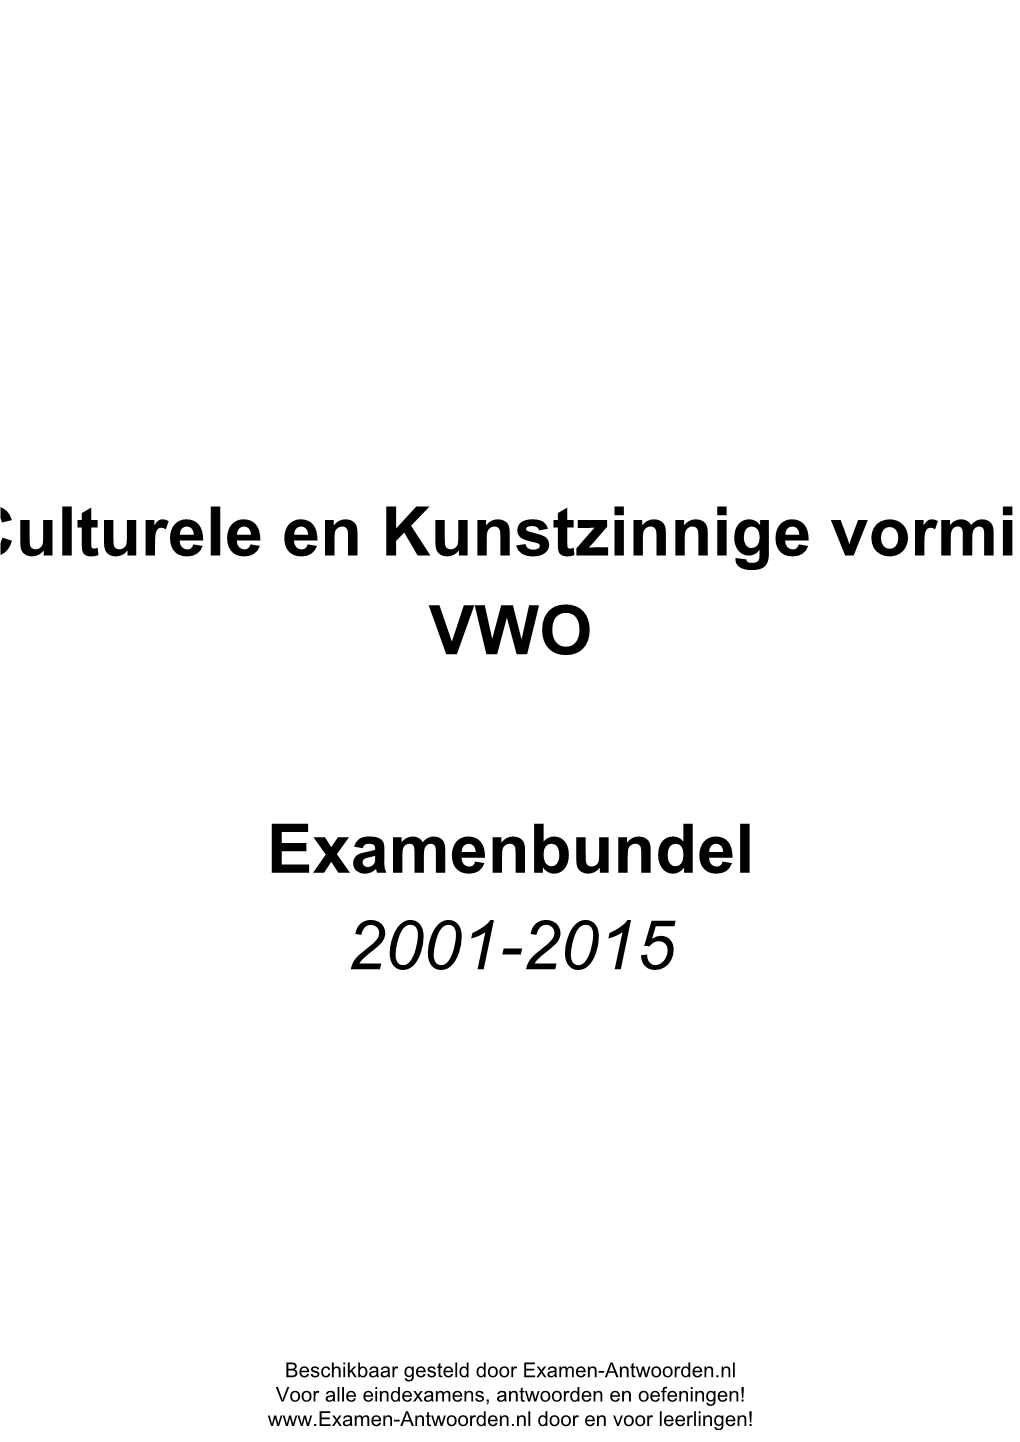 Unst En Culturele En Kunstzinnige Vorming (CKV 2) VWO Examenbundel 2001-2015